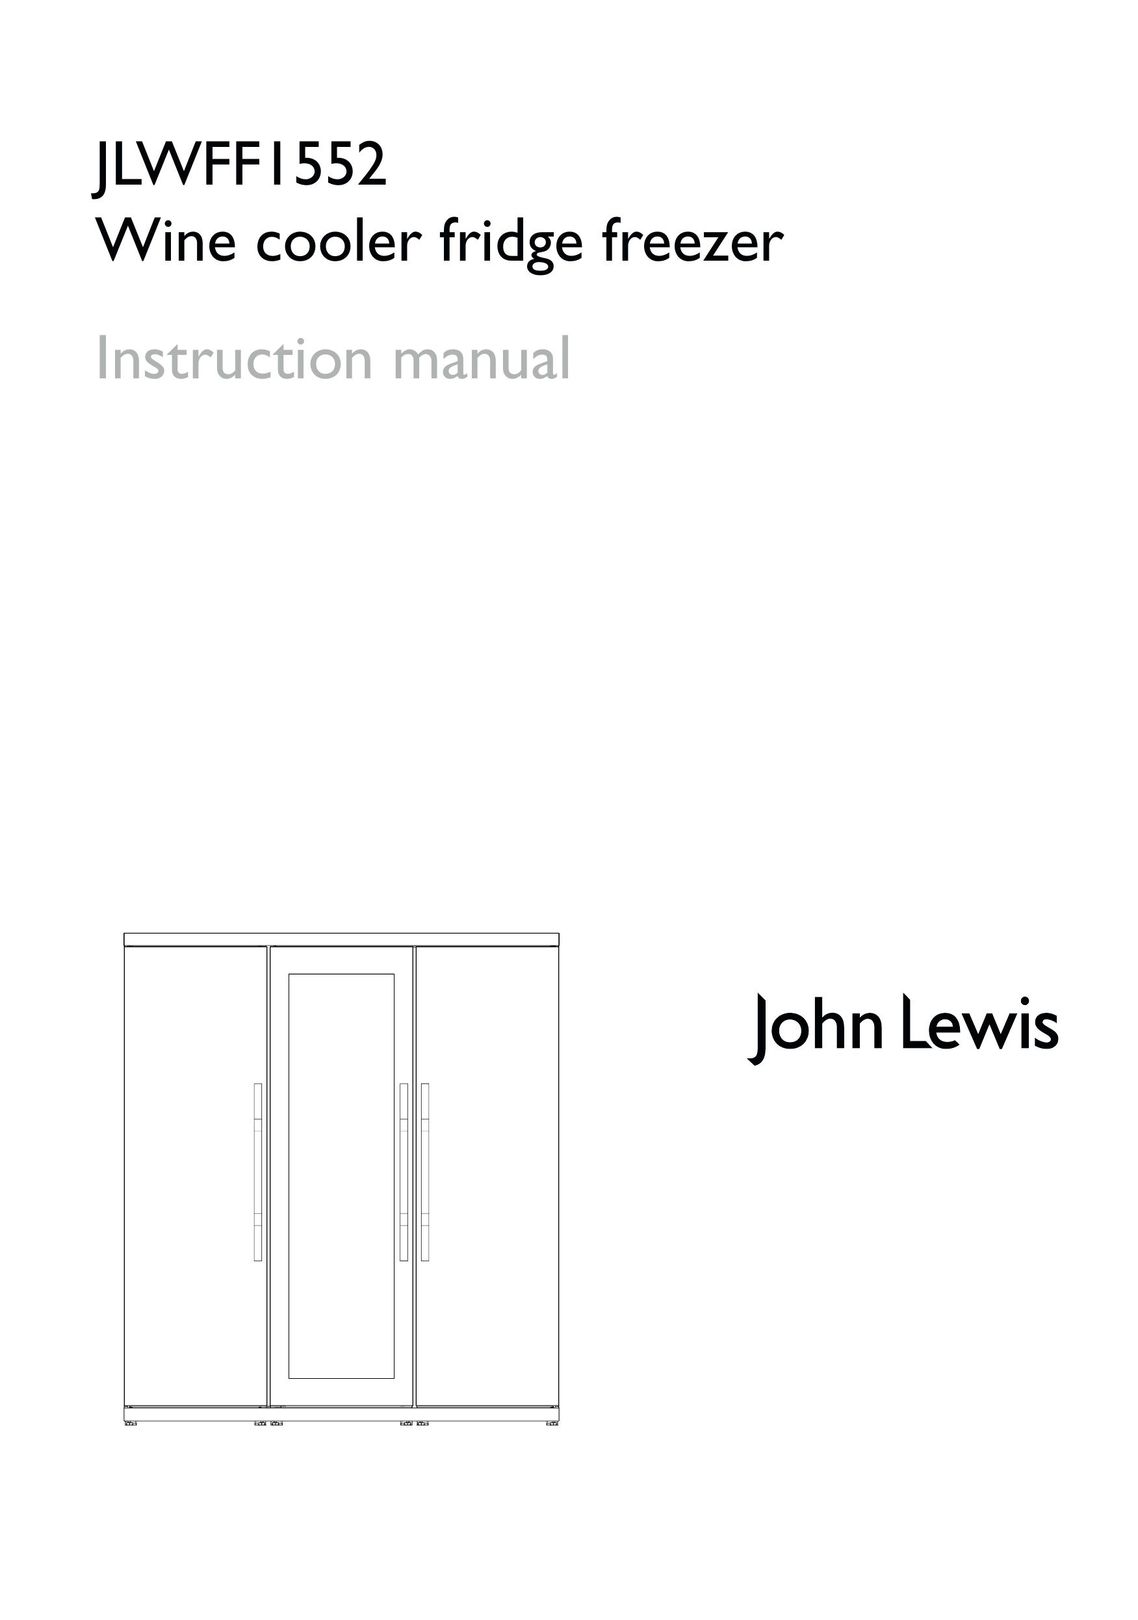 John Lewis JLWFF1552 Beverage Dispenser User Manual